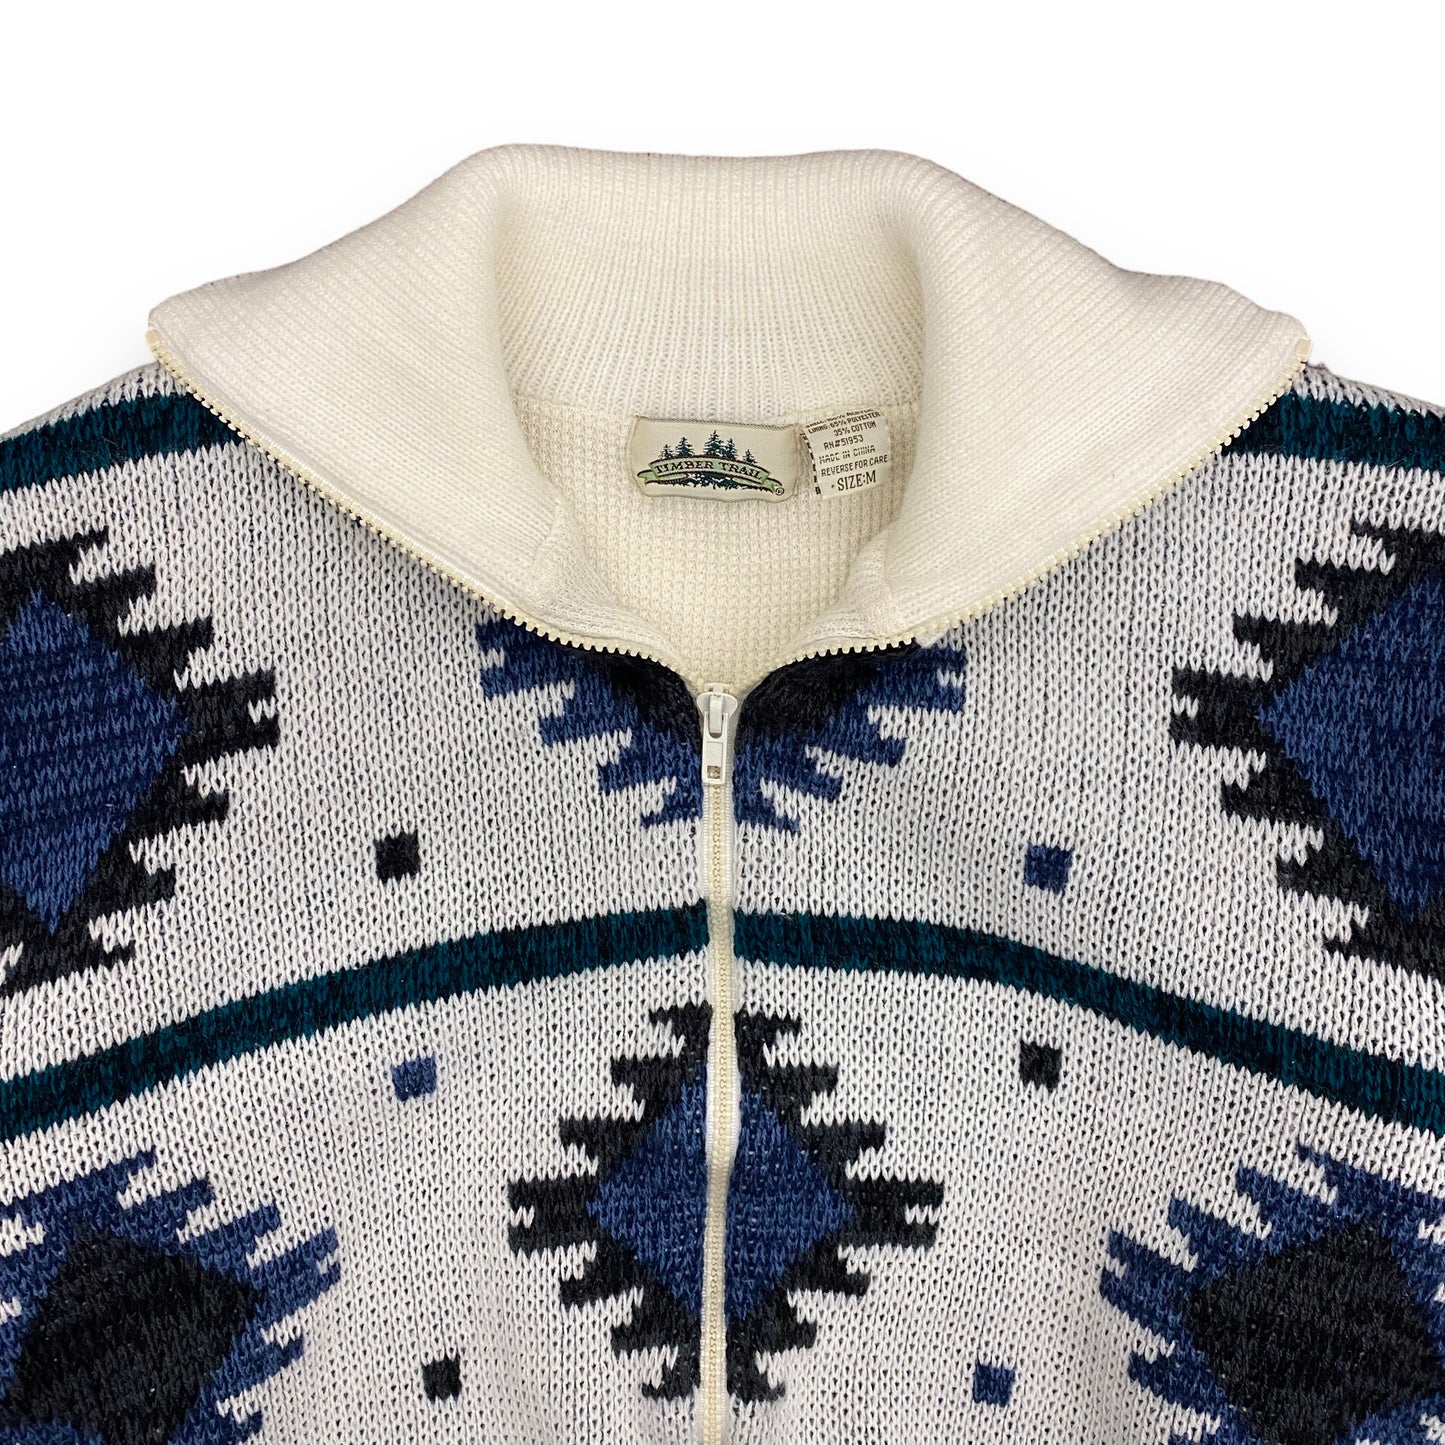 Vintage 1990s Southwestern Knit Zip Up Waffle Lined Sweater - Size Medium